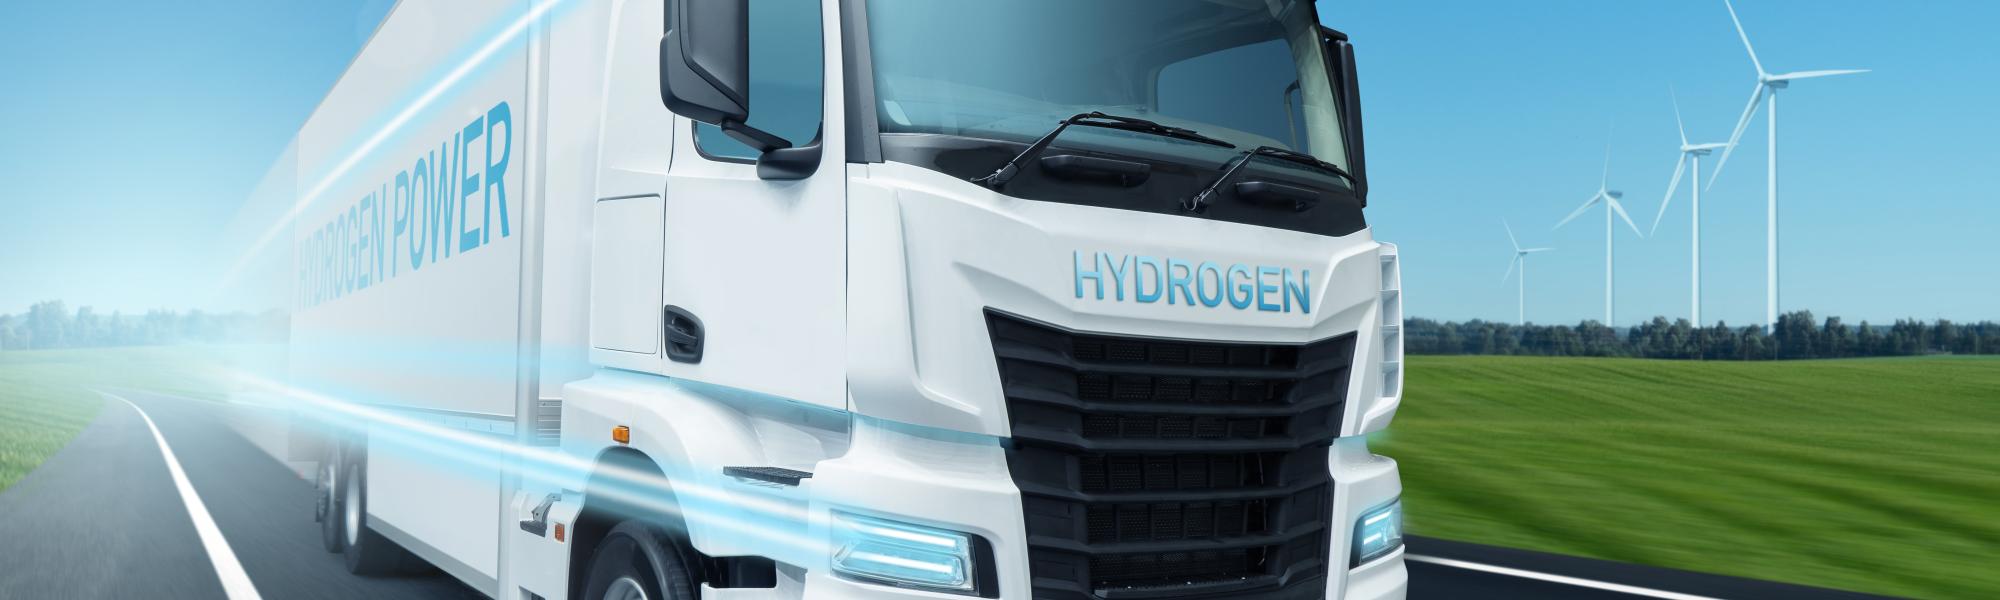 Flagship EU hydrogen truck project kicks off in Brussels